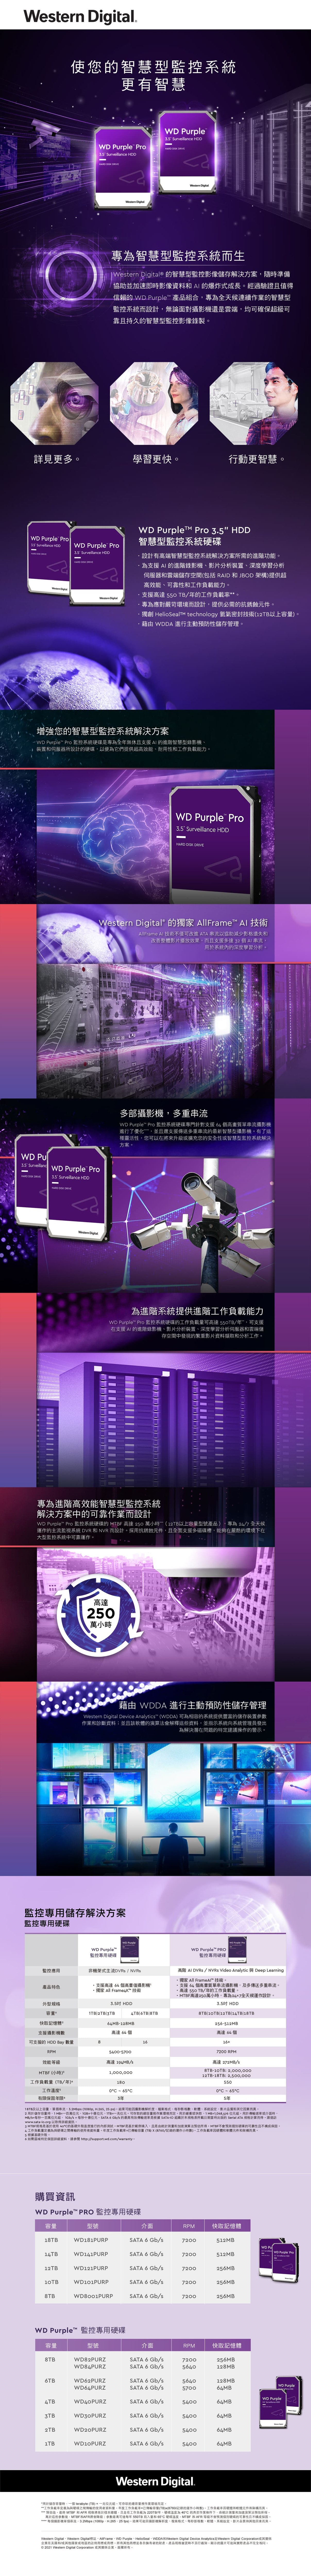 DigitalԨh  Pro  HARD  5jWetern Digital  Surveilanc  rple ProHARD DISK DRIVE 5  D Purple Pro ʺʱΥ~HARD DISK DRIVE~S֨eqWjzzʱtθѨM Purple Pro ʱtεwЬOM~LB䴩  izvB ˸mMAҳ]pwХHK̴ѶWįB@ΩʩMu@tOtB@DyʵΤia B@ʱtWO6pݰϰSwO䴩vi䴩  Bay ƶqRPMį൥MTBF (u@t q ( TB~-MϱzzʱtΧ󦳴z4TBTB1TBMiį഼zʱtθѨMפia@~ӳ]pHARD DISK DRIVEeq4TB Purple Pro.5 Surveillance ʱMxsѨM׺ʱMεwм2TB1TBRECRECWestern Digitalx Purple Pro.5 Surveillance HDDtDVRHARD DISK DRIVEWestern DigitalwЪMTԲӸƽаѾ\http//suppoF25Up17=ʸU줸/s = C줸B=Q줸1TB=Q줸8Western Digital Wa AllFrame  ޳NAllFrame  ޳Nȥii A yHUּv򥢩MﵽvĪG,ӥB䴩hF 32   y,ΩtΤ`׾ǲߤRCMzʱtΦӥWestern Digital? zʱvxsѨM,HɷǳƨUå[tYɼvƩM  zCgLҥBȱoH઺  Purple ~զX,MѭԳs@~zʱtΦӳ]p,L׭v٬O,iTOWťiaB[zʱvsC1TB 2TB3TBWD PurpleʱMεwWD181PURPD[DyDVRs/WD141PURP8(18p, H.265, 25 psCӦy,3.2MbpsWD121PURP䴩 ӰevFWa All  ޳NWD101PURPWD82PURZWD84PURZWestern DigitalWD62PURZWD64PURZWDPURZWD30PURZʶRTWD Purple PRO ʱMεwЮeqterabyte (TB) = seq,@ӬitδѶiu@tOWD Purple Pro ʱtεwЪu@tqiF /~,i䴩b䴩  ivBvR˸mB`׾ǲߤRAMxsŶo{cvƩMRu@CWD81PURPMTBF F 250 Up(12TBHWeq~)NVR ӳ]pCĥΧ׻k,B䴩hϺм,bYŪҤUbT HDD64MB-128MBWD Purple ʱMεwЫǲߧ֡CWD PurpleAT  HDDǥ WDDA iDʹwxs޲zWestern Digital Device Analytics (WDDA) iۮetδ״Ixs˸mѼƧ@~ME_ƨåBӳn骺tk|oǸ,ëܨtΦVtκ޲zoXѨMbDSwĳާ@ĵܡCF 194MB/shv,hyWD Purple Pro ʱtεwбMw䴩 64 ӰeyviFu,åB٤䴩ǰehy̷szvCFoF,ziHbNӤɯũXRzwʩδzʱtθѨMסCF 64 5400-5700.rt.wd.com/warrantyC1,000,0001800C  65C3~WD Purple Pro  HDDzʱtεw 8TBu@ūצOT~C18TBΥHWeq,,CгyXoC2 Ω xs e q MB/s=C@ʸUwww.sata-io.org H3 MTBFWO4u@tqwߡCԲӸ T40¦~ϥδ߷ū׶i檺աCMTBFOdҥ[|J,BOѲέpqMPwФǿ骺ϥΪ̸ƶqC~פu@tv=wǿeq(TBqX (8760/O)wӧOwЪiaʥBc OTCB@pɼ)Cu@tv]wMn餸M[cӲCھڰ¦~]pݴzʱtθѨMשһݪi\C䴩  ivBvR˸mB`׾ǲߤRAMxsŶ(]A RD M JBOD [c)ѶWįBiaʩMu@tOC䴩F  TB/~u@tvCMYVҦӳ]p,ѥݪ׻kC0W  technology Kʧ޳N(12TBHWeq)ǥ WDDA iDʹwxs޲zC16SATASATASATASATASATASATAREDSATASATASATA 6SATASATASATAMB=1,048,576 줸աCΩǿtvΤ,ΩwĩΧ֨,16 Gb/s ̰ĶǿtvOھ SATA- ´󥻳WҸɥX Serial ATA WpӱoCSATA6 Gb/sSATA6 Gb/s6 Gb/s6WD Purple3.5" Surveillance HDDHARD DISK DRIVE6Gb/s6 Gb/s6 Gb/s6Gi]vѪRסBɮ׮榡BCvơBnBtγ]wBv~M䥦]ӲC@줸Cis`eq@~ҦөwCGb/s6Gb/s6 Gb/s62Western DigitalGb/sWD Purple Pro3.5" Surveillance HDDHARD DISK DRIVE) Gb/s00Gb/s6 Gb/sMTBFtWD Purple PROʱMεwAI  / NVRs Video Analytic Deep Learning-WaAll FrameA? ޳NC䴩 64 Ӱeyv,ΦhǰehyCPF550TB/~u@tqCtkwRPM72007200F250Up,M247ѭԹB@]pC3.5T HDD8TB12TB14B18B256-512MBF 64 720072007200RPM*72005640ʧ󴼼zC5640570054005400540054003M 24/7 ѭWD Purple ProHDұoCF 272MB/s8TB-10TB: 2,000,00012TB-18TB: 2,500,000M7200 RPMTBF5500C  65C5~֨O512MB512MB256MB256MB256MB֨O256MB128MB128MB64MB64MB64MB64MB64MBWestern Digital.*ήƶqC~ײv=줸աCis `eq@~ҦөwC*u@tvwqP w  ǿ骺ϥΪ̸u @ t  wǿeq(T B )(8760/OB@pɼ )Cu @tv ]wMn餸M[cӲC*** wȡC̲ MTBF M AFR W  N    `  , BO/~B wз  40C   @~U ,Ѳ p qM[ttkw  ұoCoǰѼƫ,MTB FMAFRN|;ѼƳ̰iFM AFR  |w OwЪ i a  B  c  OTC CvӦy,3.2Mbps (1080p,H.265,25 fps)CGi]vѪRסBɮ׮榡BCvơBn~ML]ӲCbu@220TBt550TB gJqC~65XC wMзšCMTBFŤӡBtγ]wBvWD Pu3.5  WD Purple ProWesternDigitalWestern Digital AllFrame WD Purple HelioSeal WDDAWestern Digital Device Analytics Western Digital Corporation~b M/ΨLaΦaϪUӼЩΰӼСCҦL ЬOU۾֦ ̪]C~Wܧɤt qC Ϥi Pڲ~ۦPC? 2021 Western Digital Corporation    Y  ~ C  v  C15 Surveillance HDD1WD Purple3.5 Surveillance HDDWD Purple